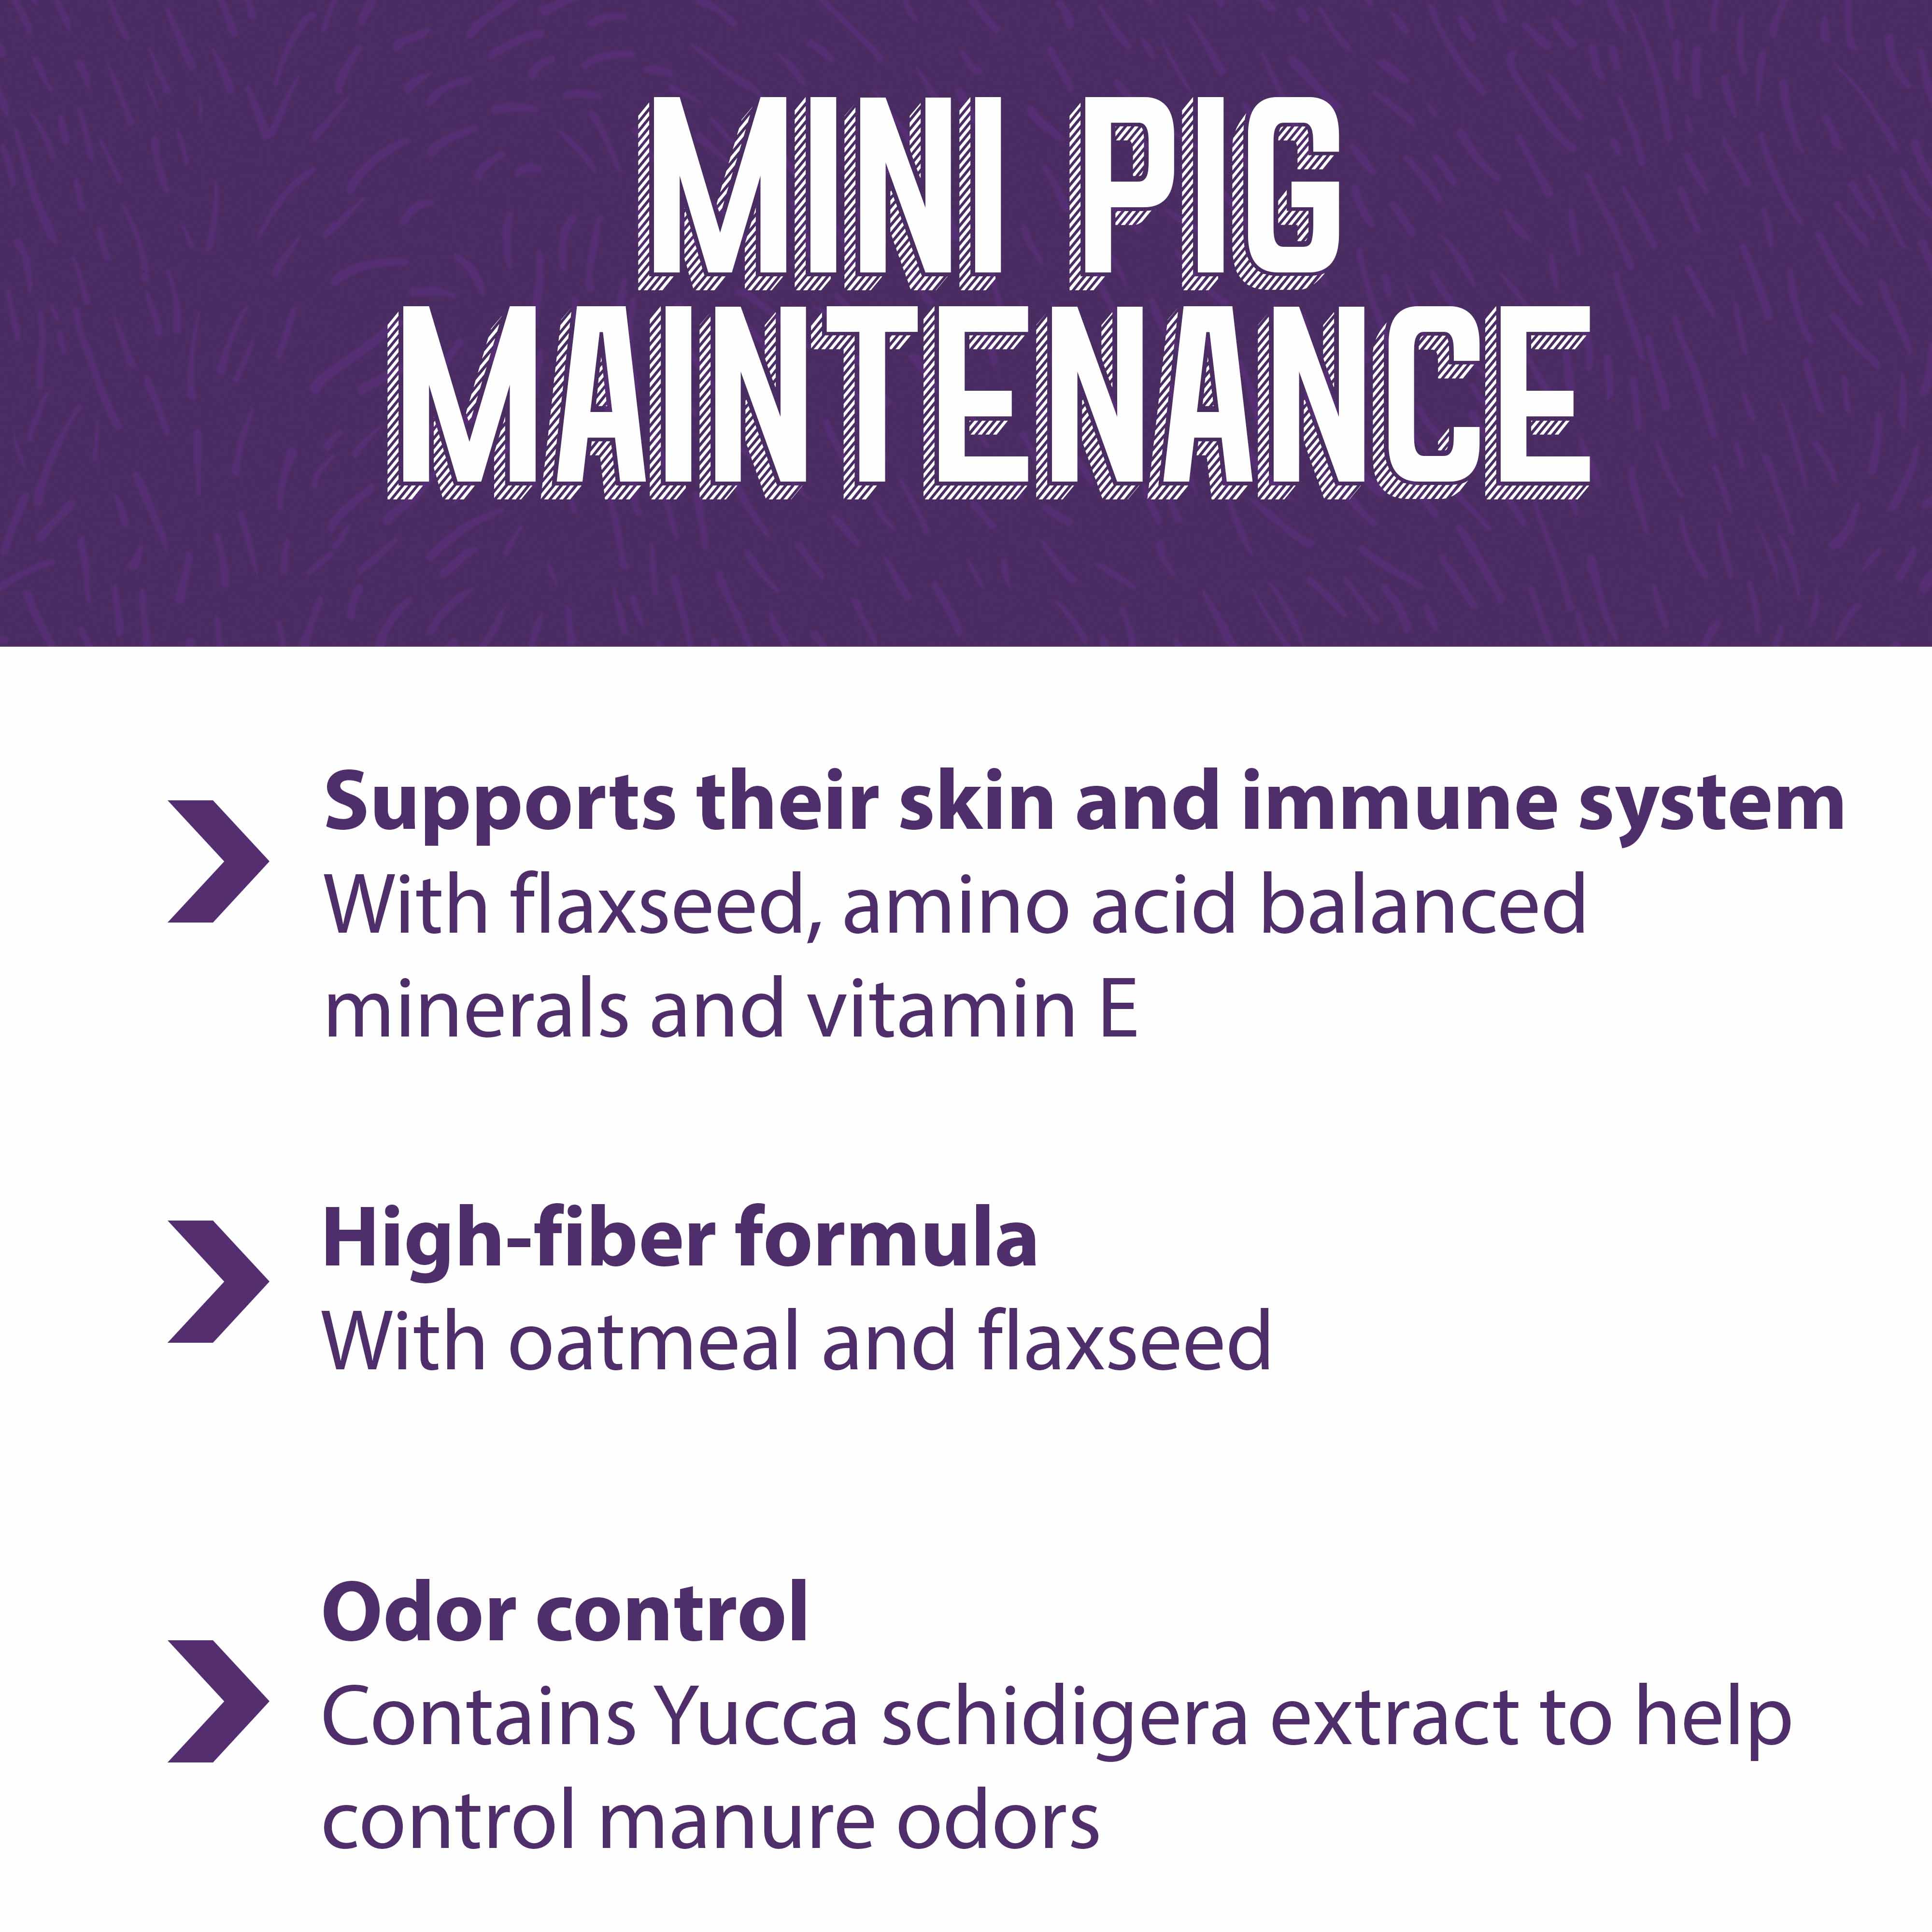 Mini Pig Maintenance is high in fiber